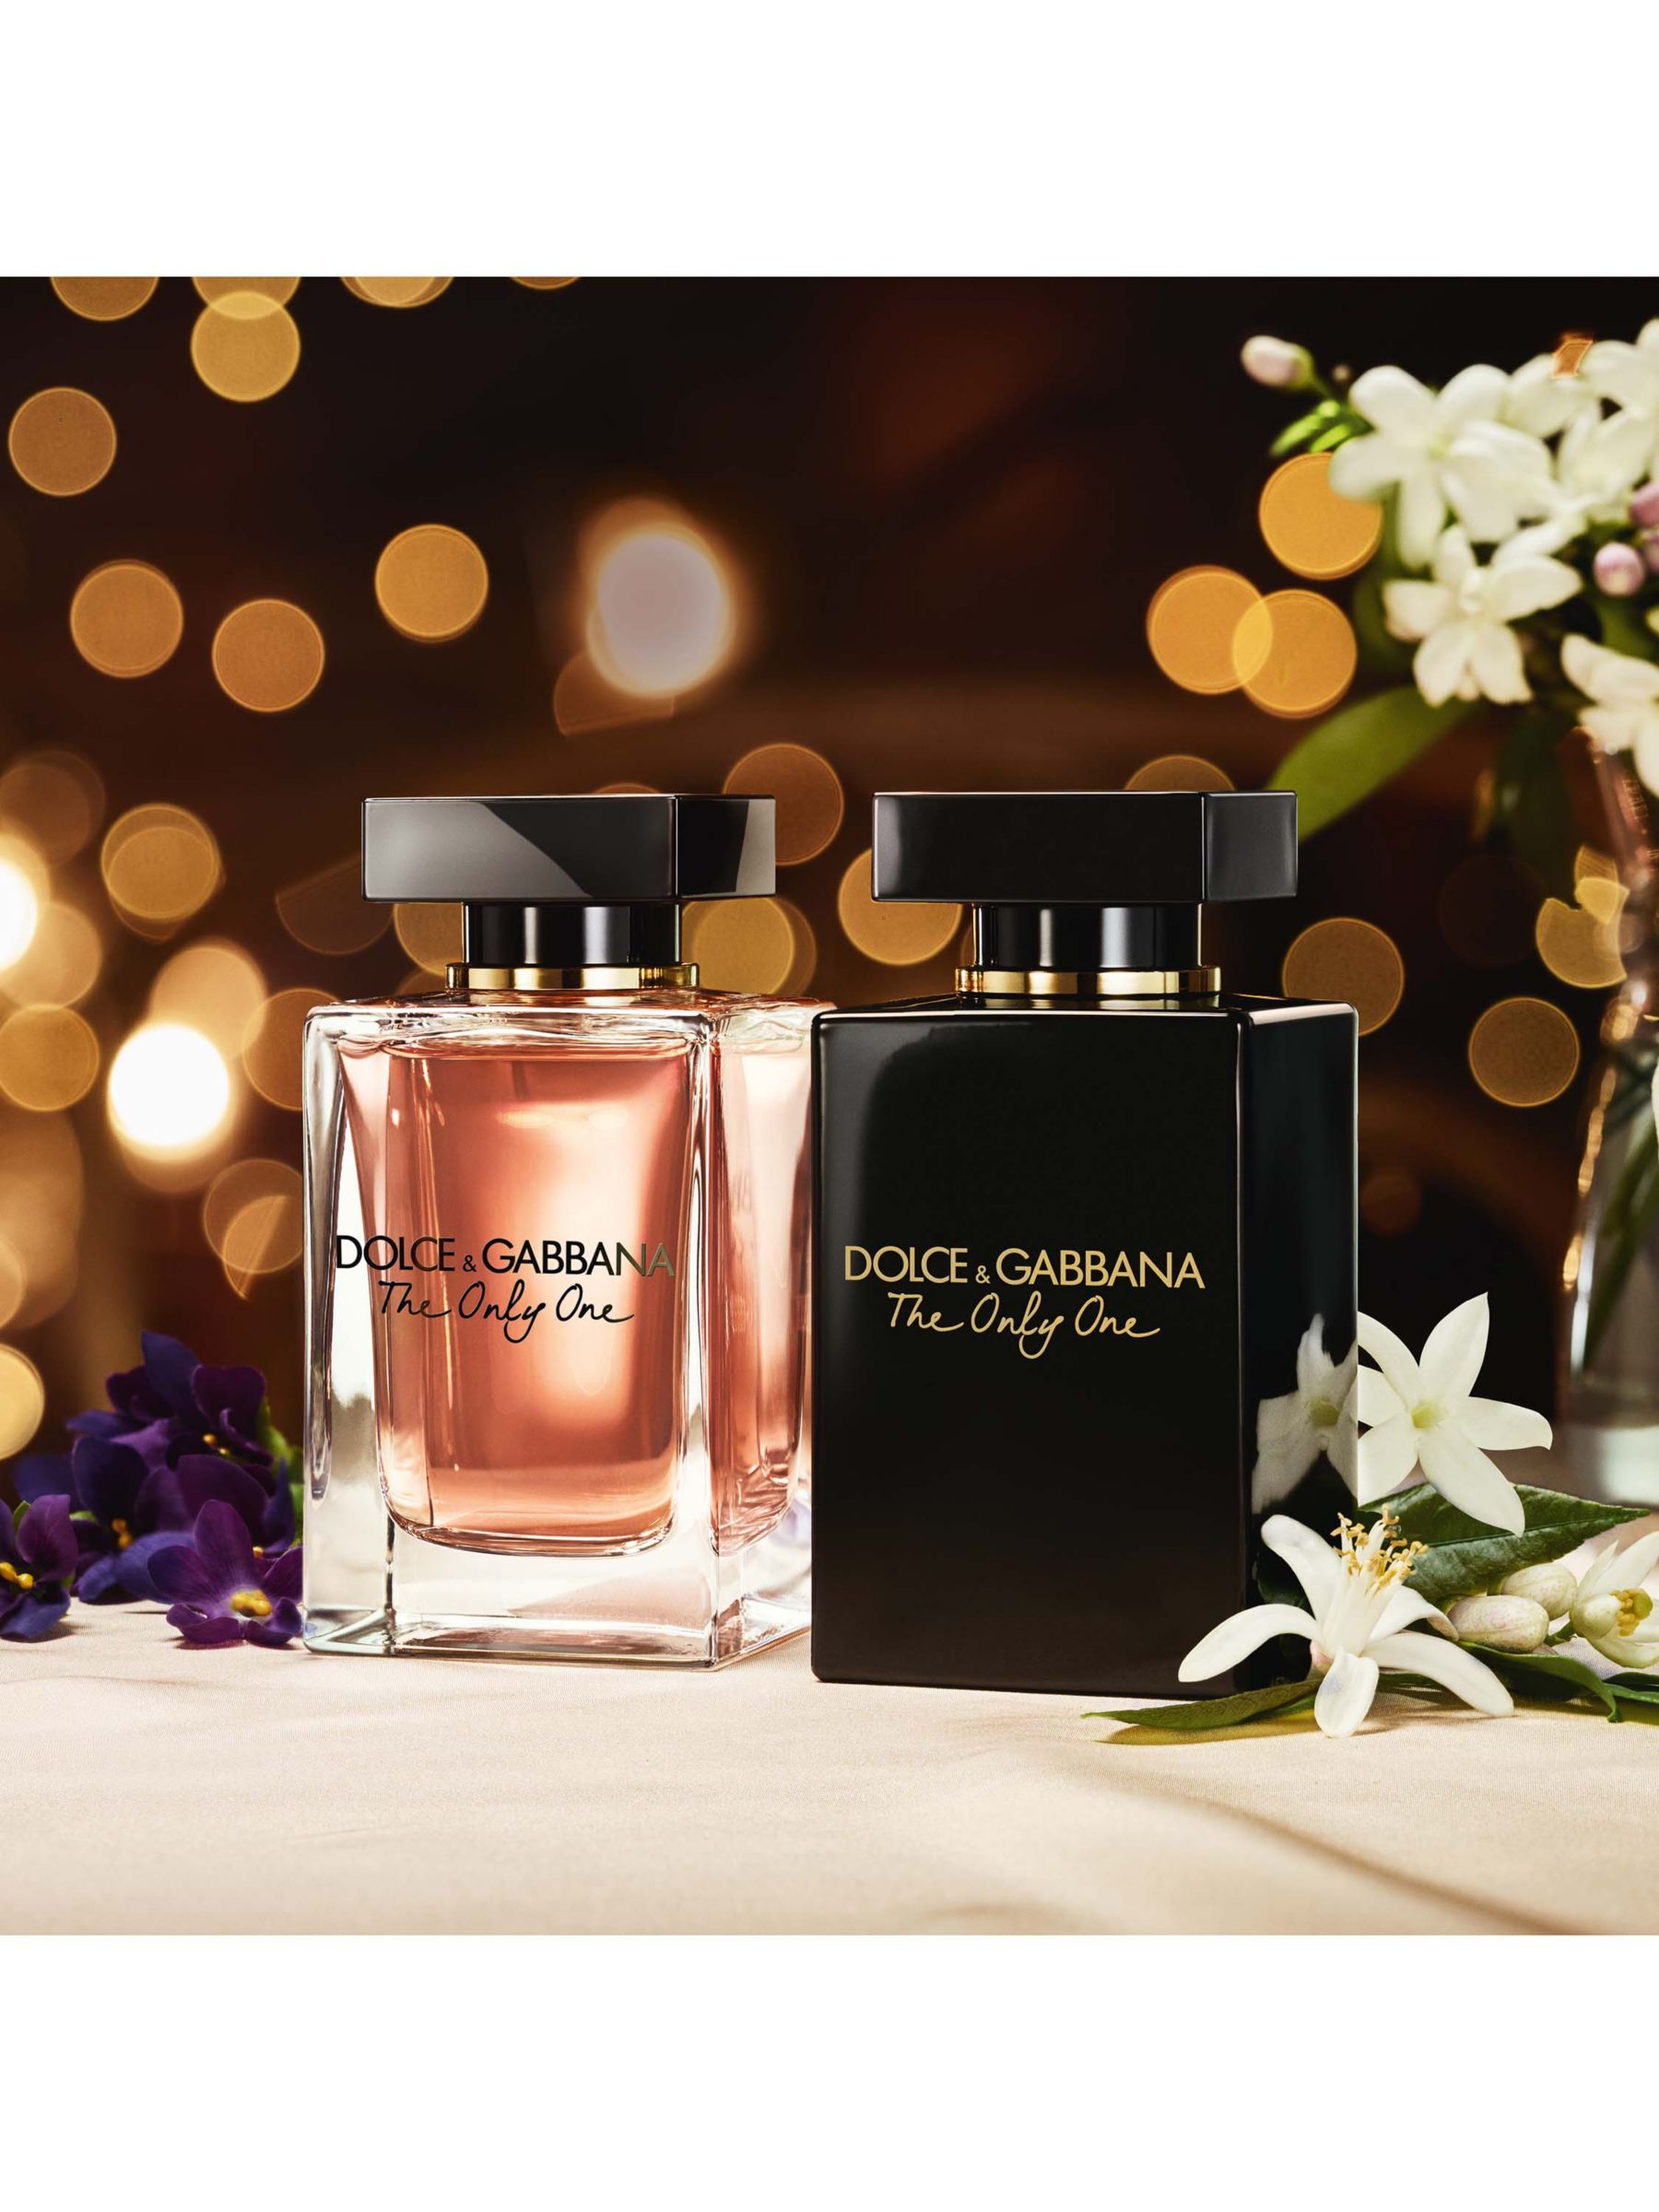 Dolce & Gabbana The Only One Eau de Parfum, 30ml 5